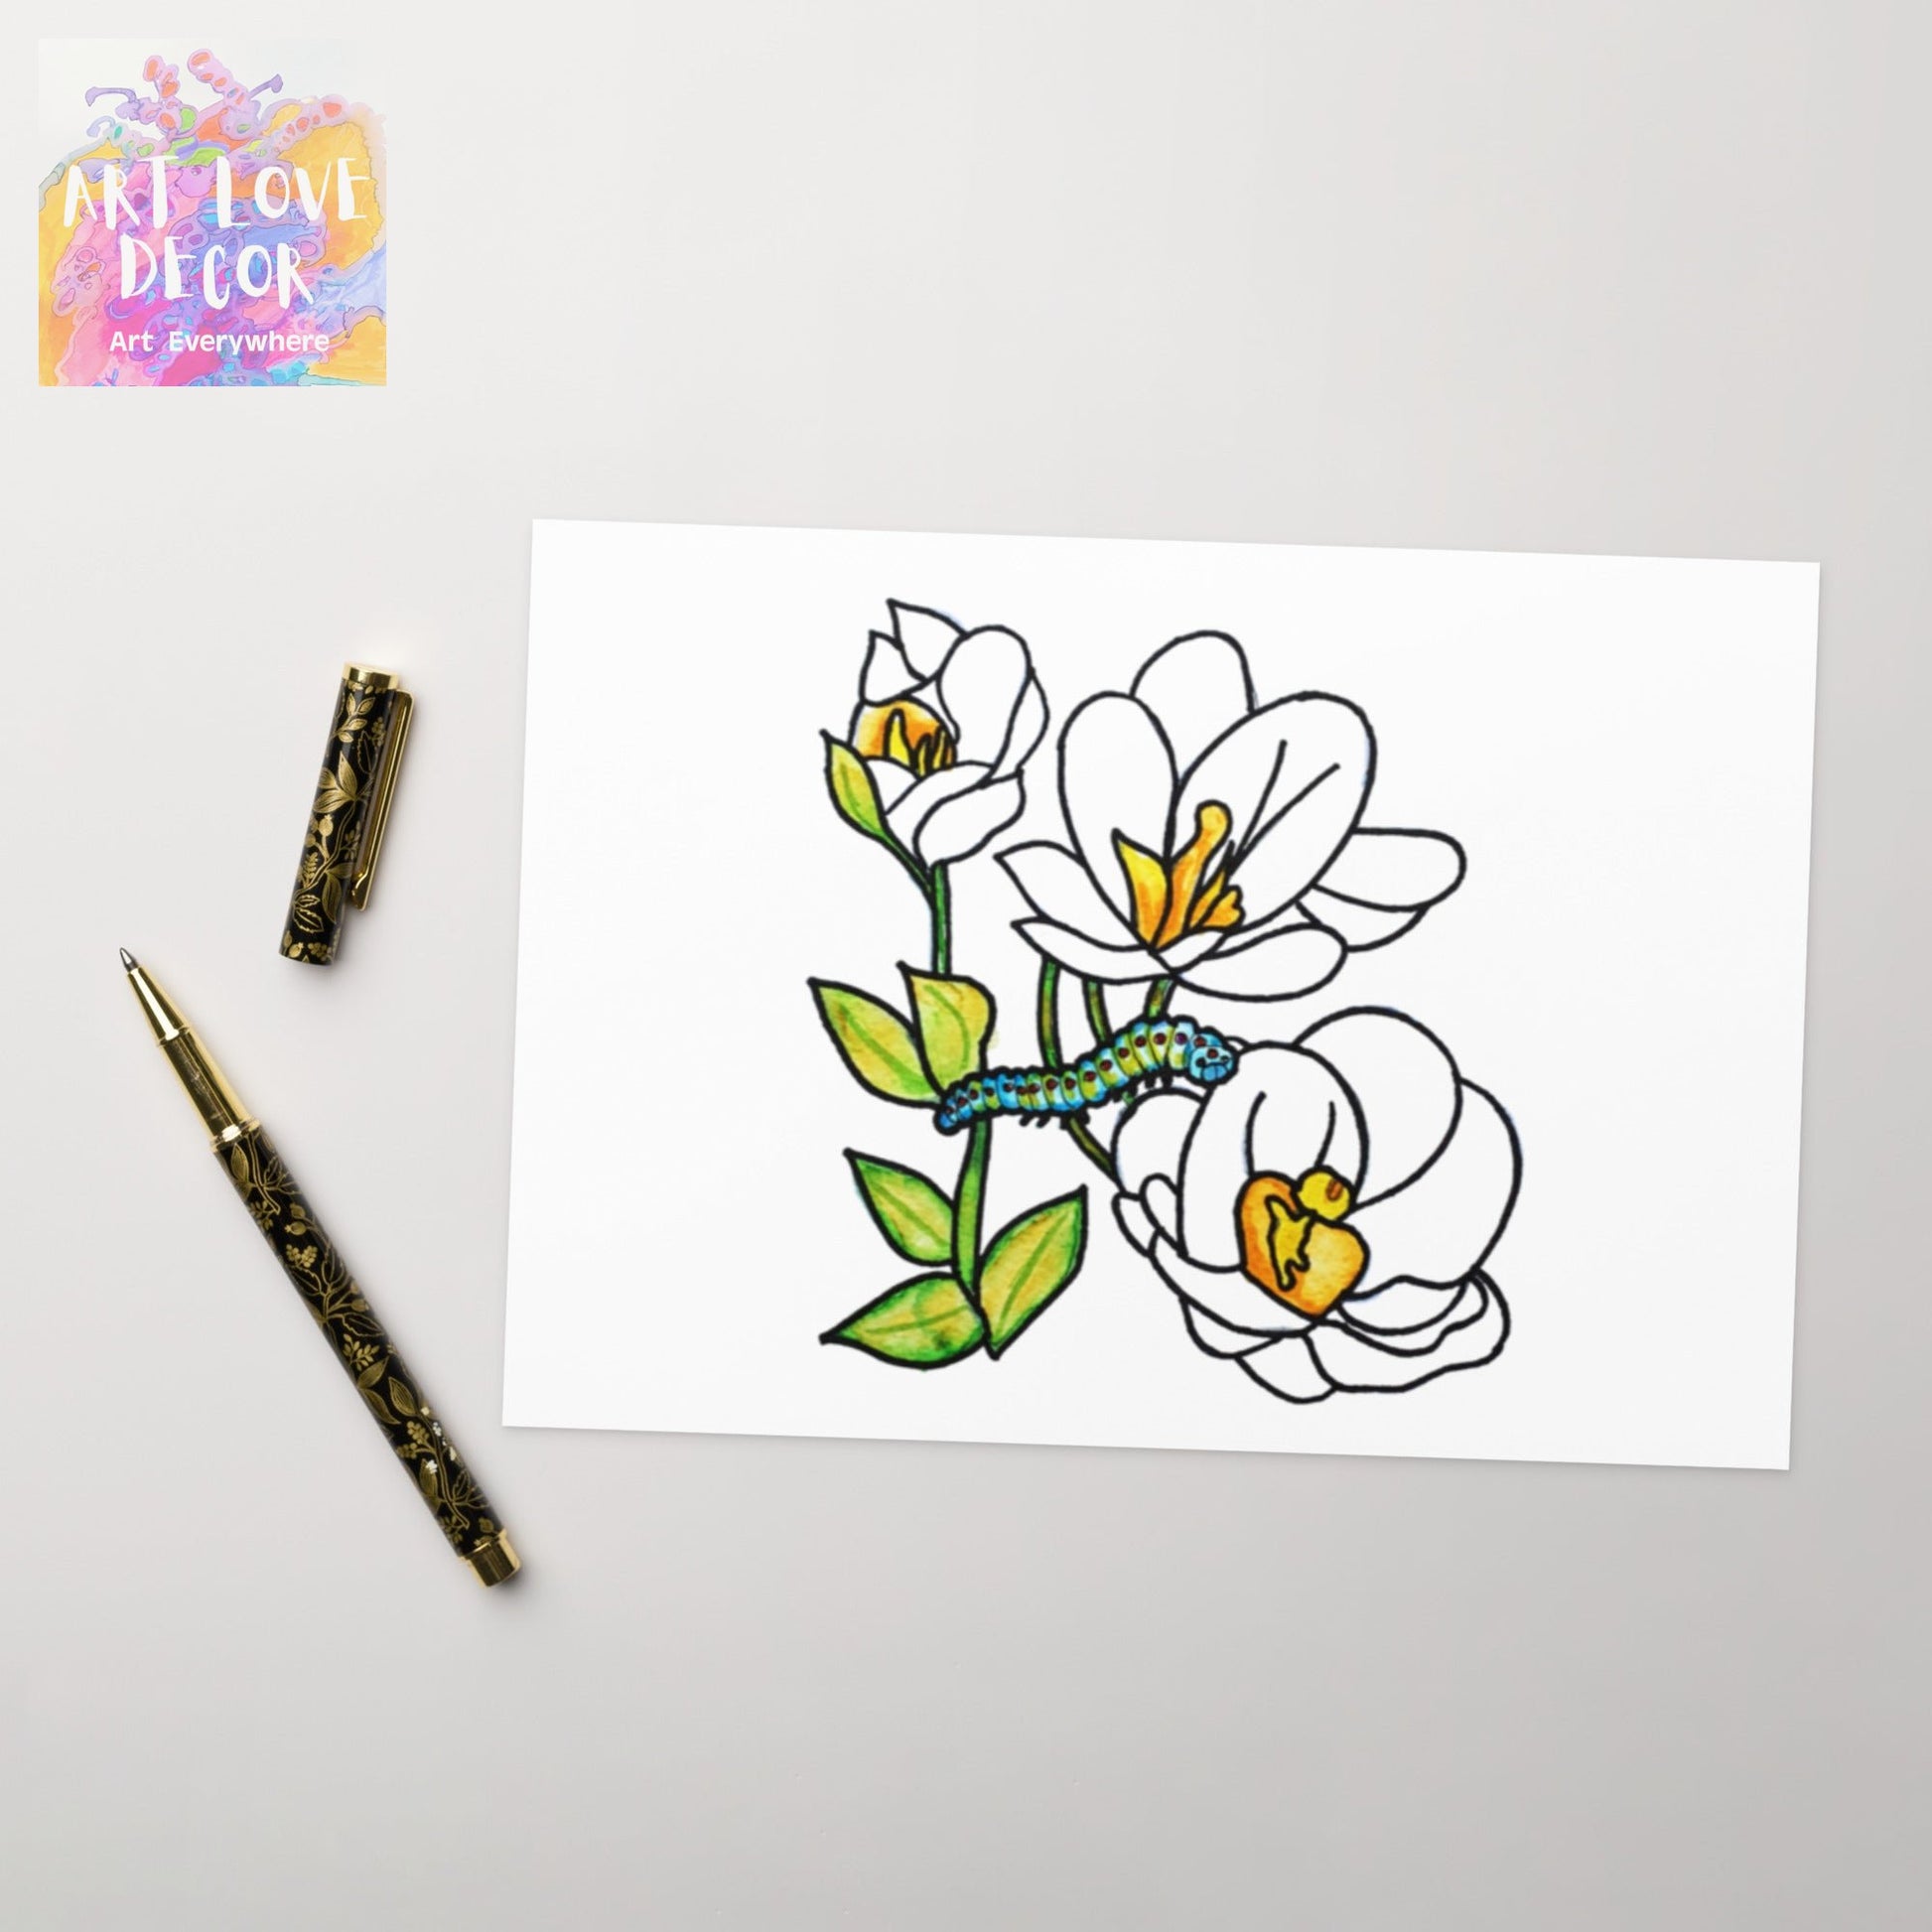 White Flowers Greeting card - Art Love Decor